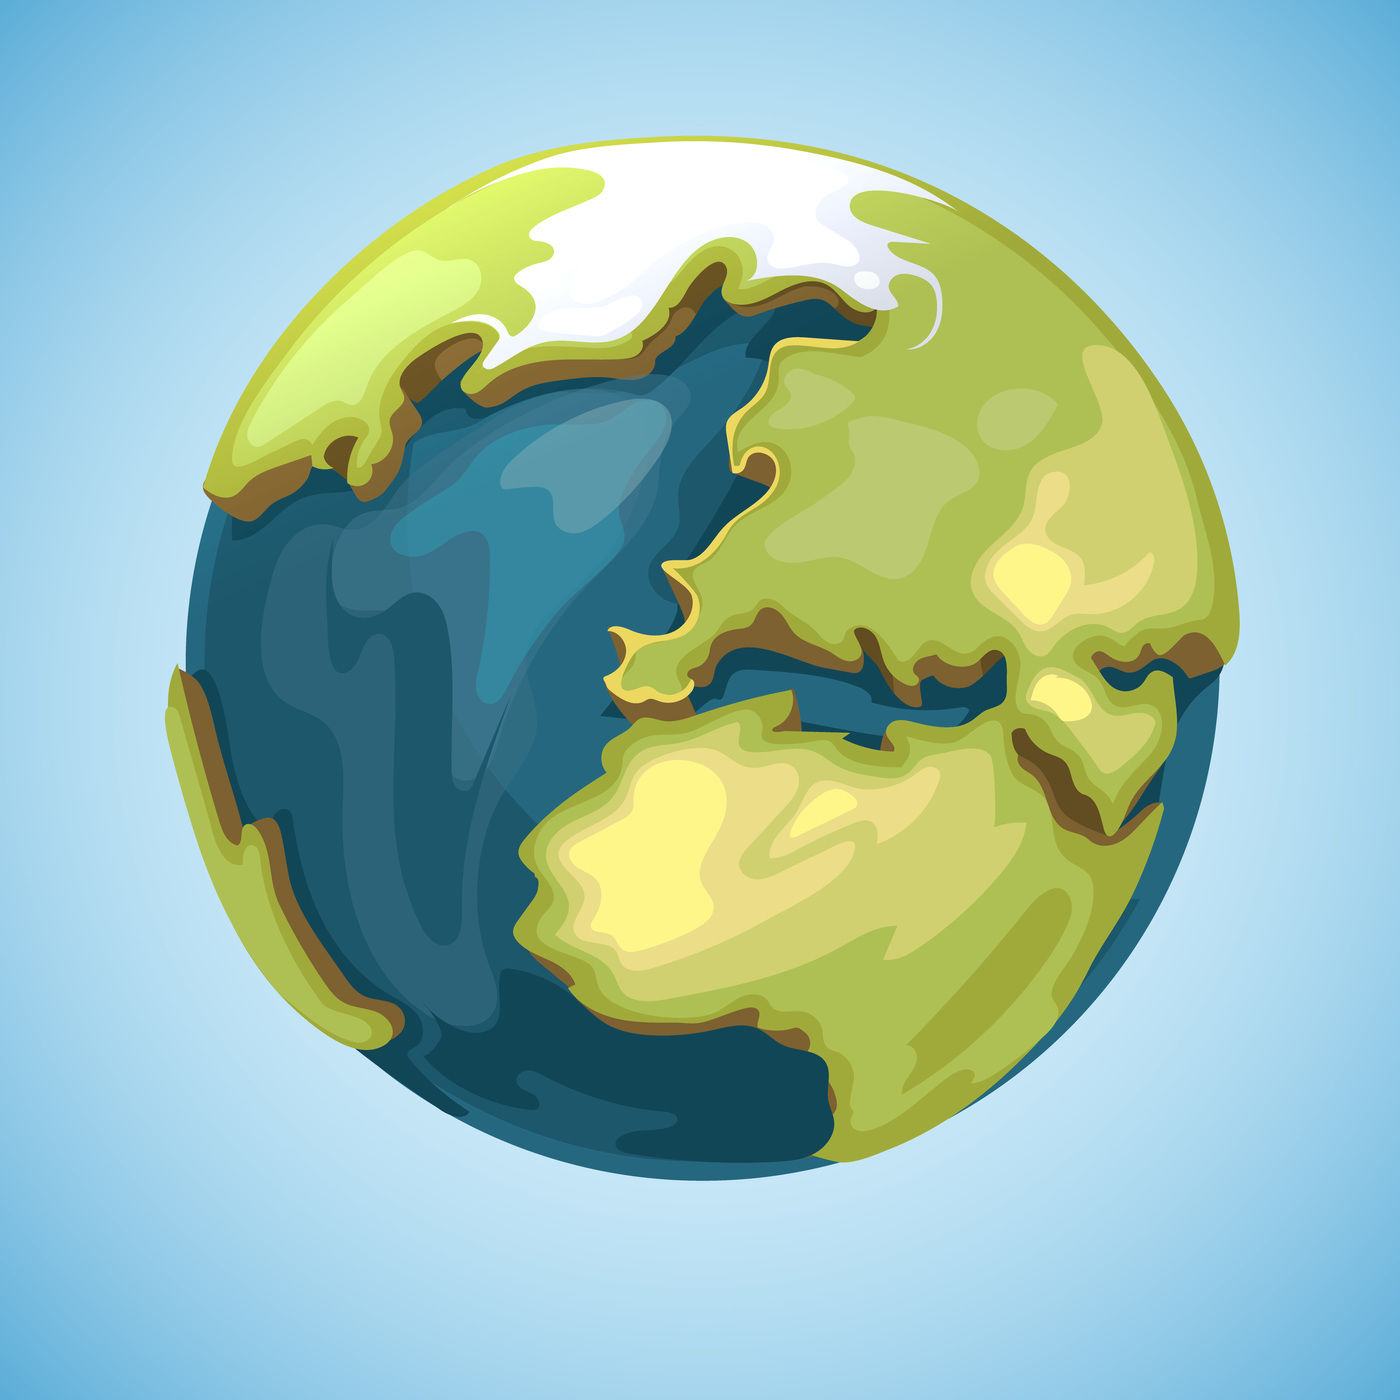 Cartoon earth globe vector illustration in style By